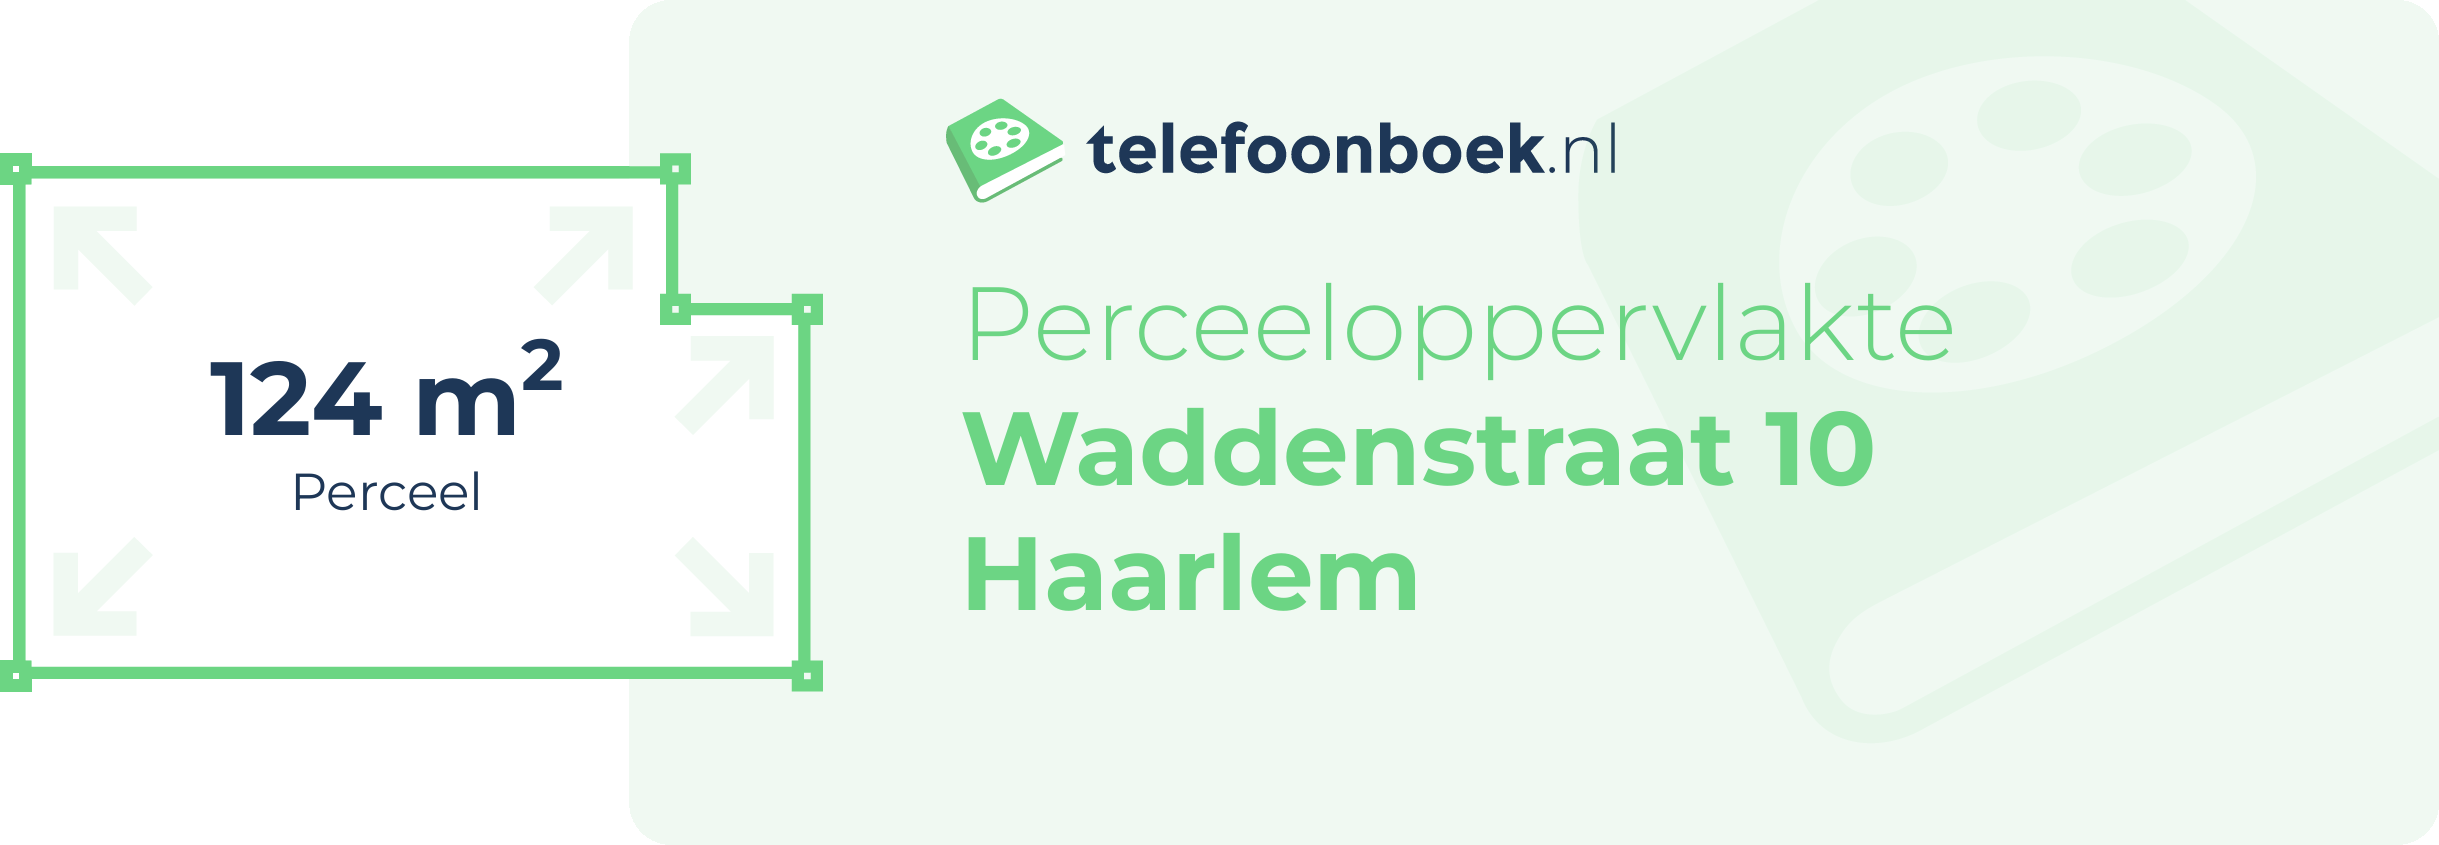 Perceeloppervlakte Waddenstraat 10 Haarlem